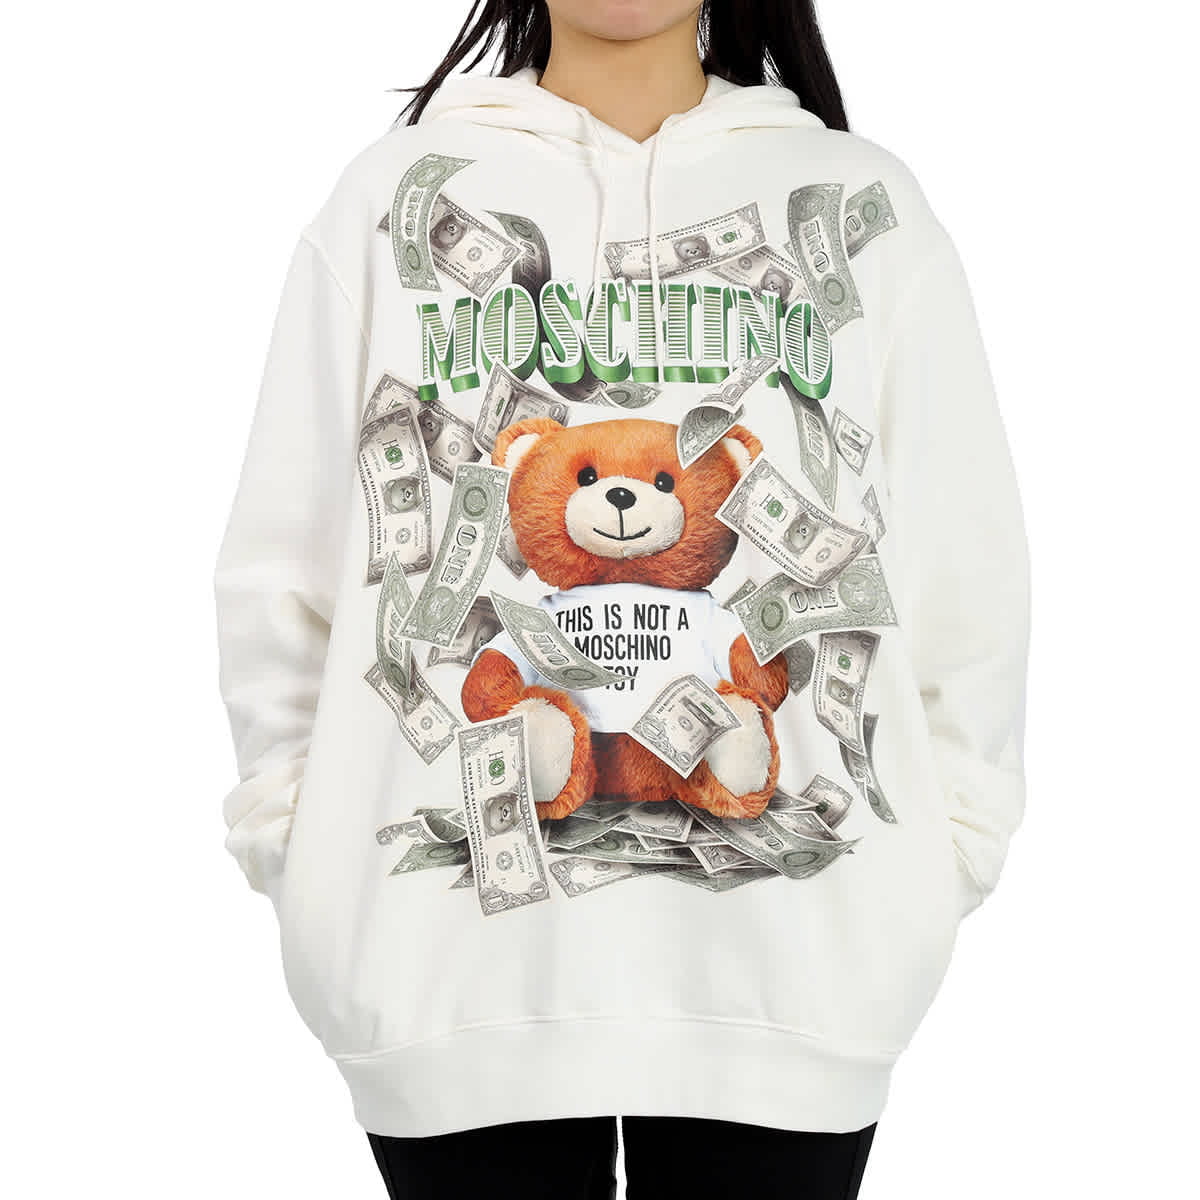 dominere indeks Beskrivende Moschino White Teddy Dollar Print Hooded Sweatshirt, Brand Size 38 (US Size  4) - Walmart.com